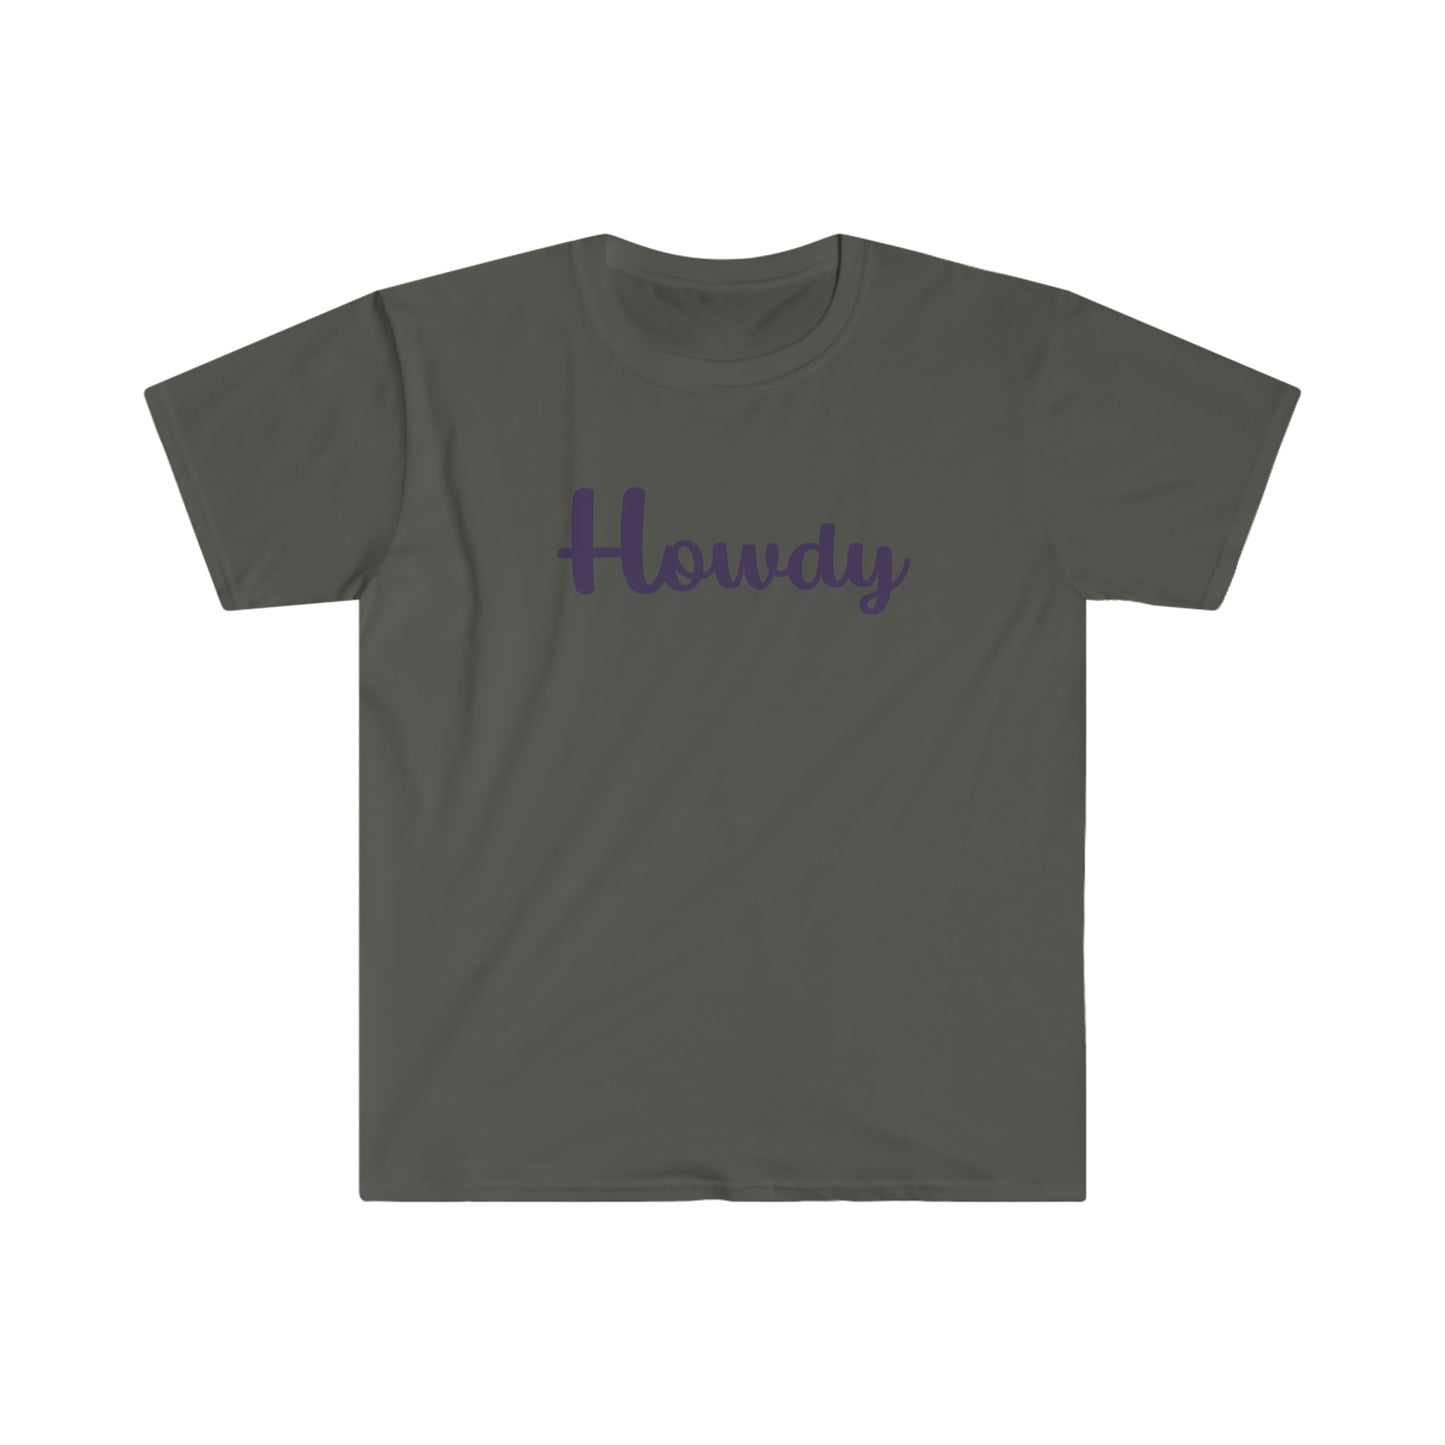 Howdy - Nacogdoches - T-Shirt